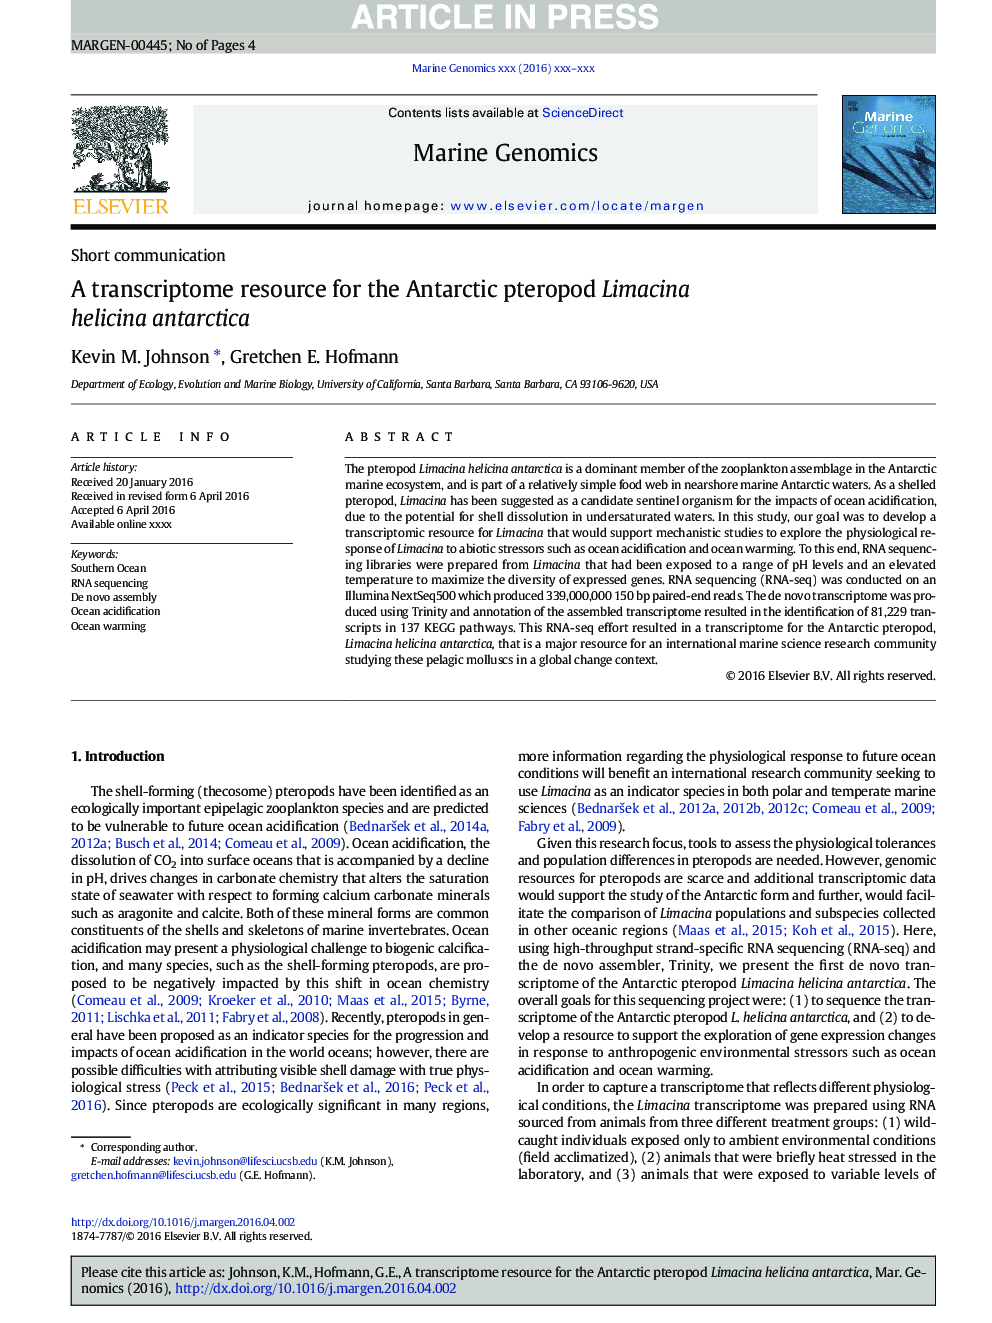 A transcriptome resource for the Antarctic pteropod Limacina helicina antarctica